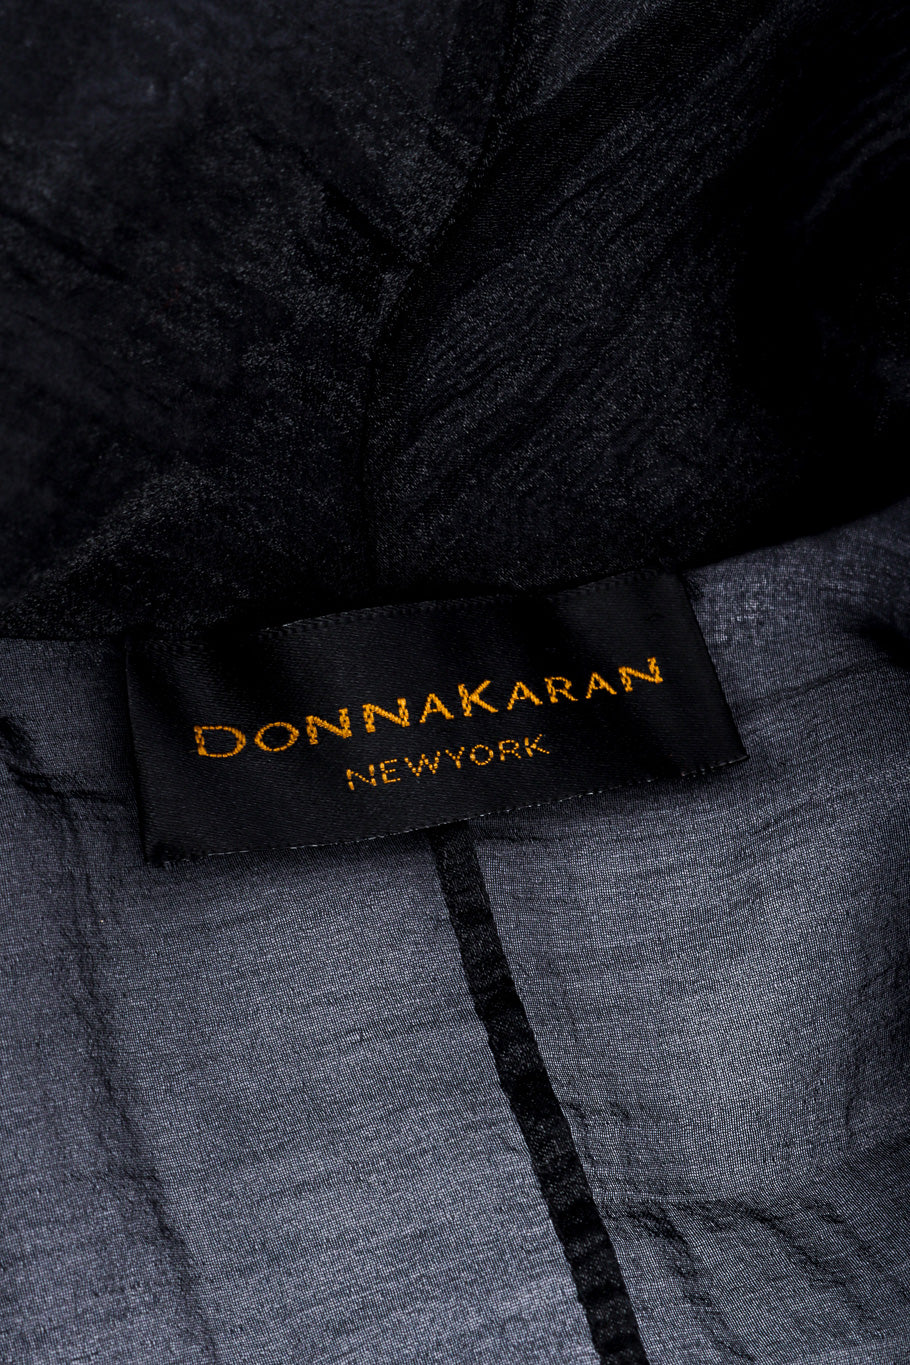 Silk duster by Donna Karan label @recessla